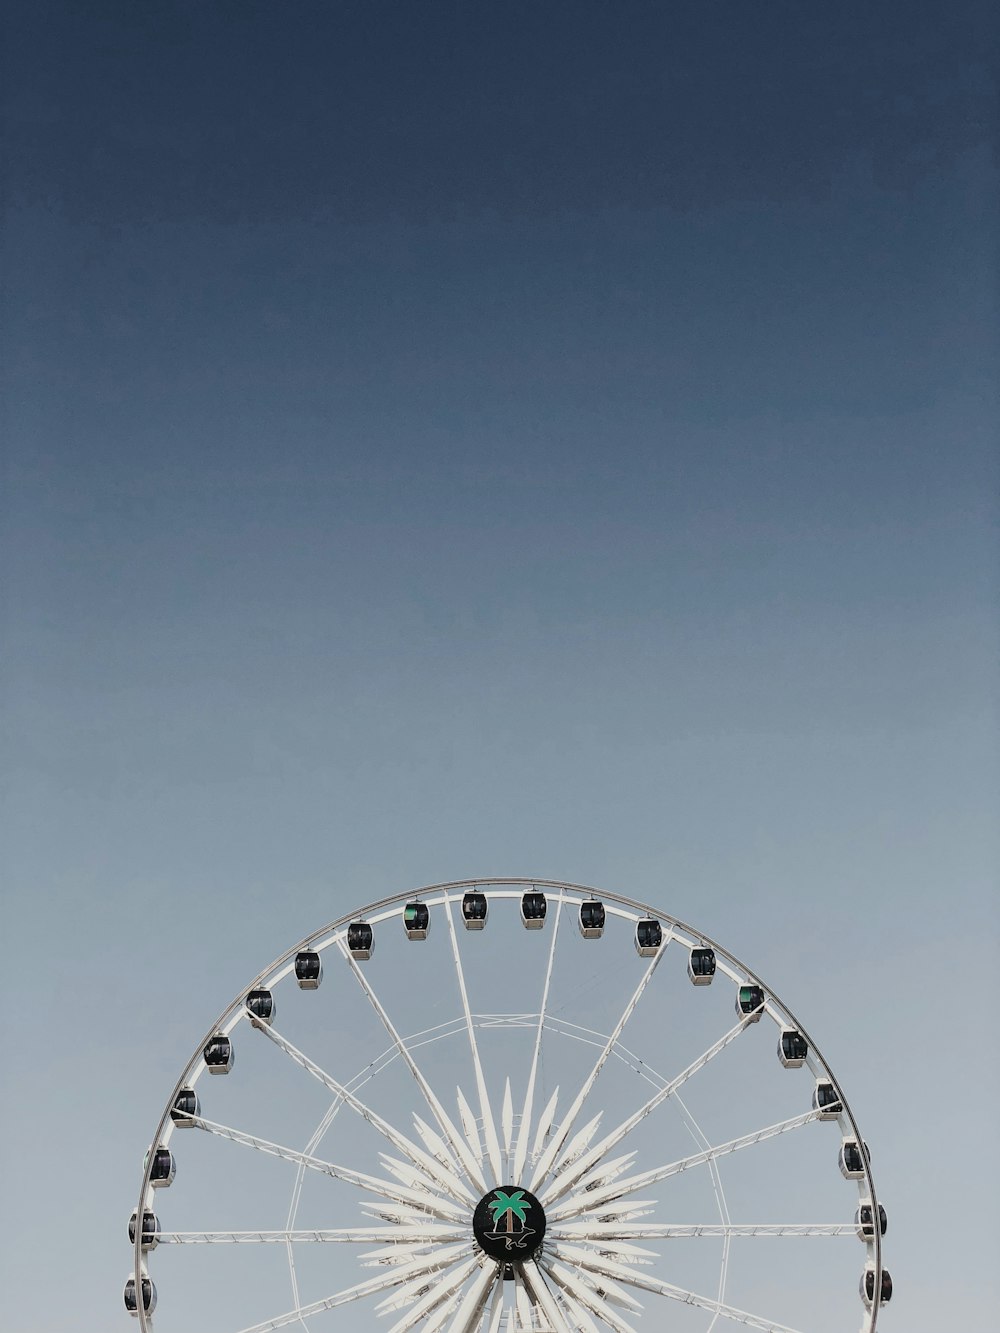 white and black Ferris wheel